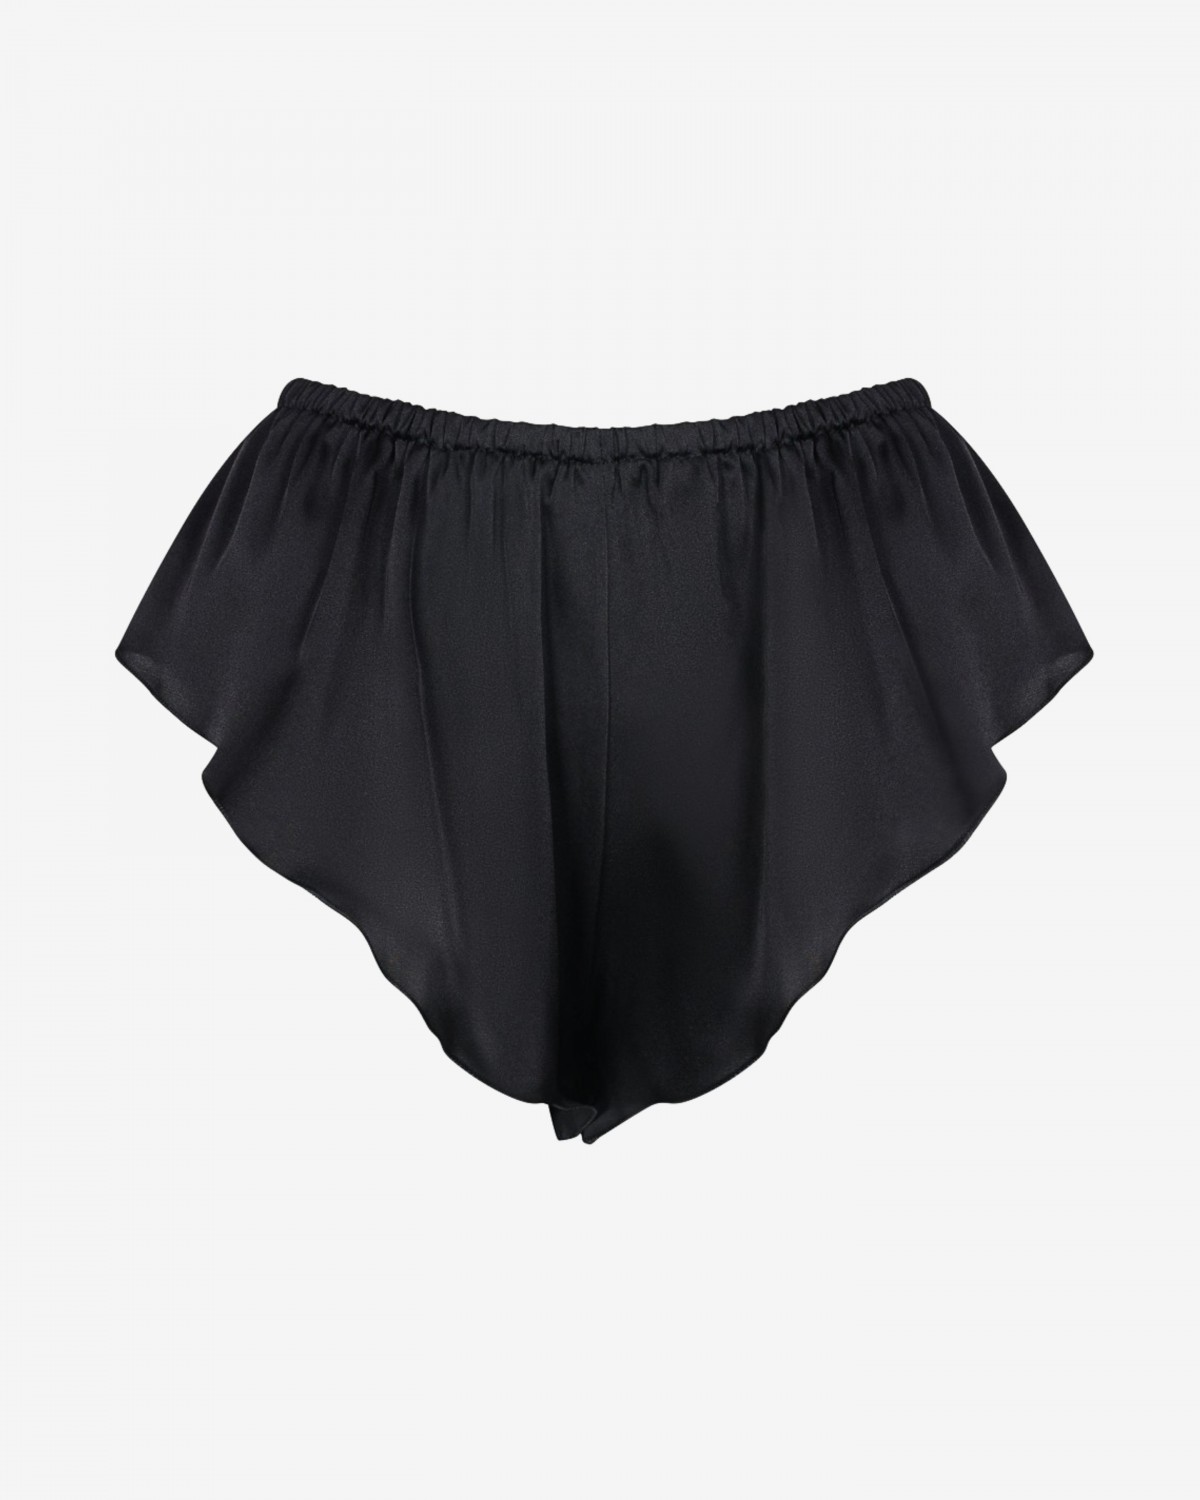 sofia // shorts